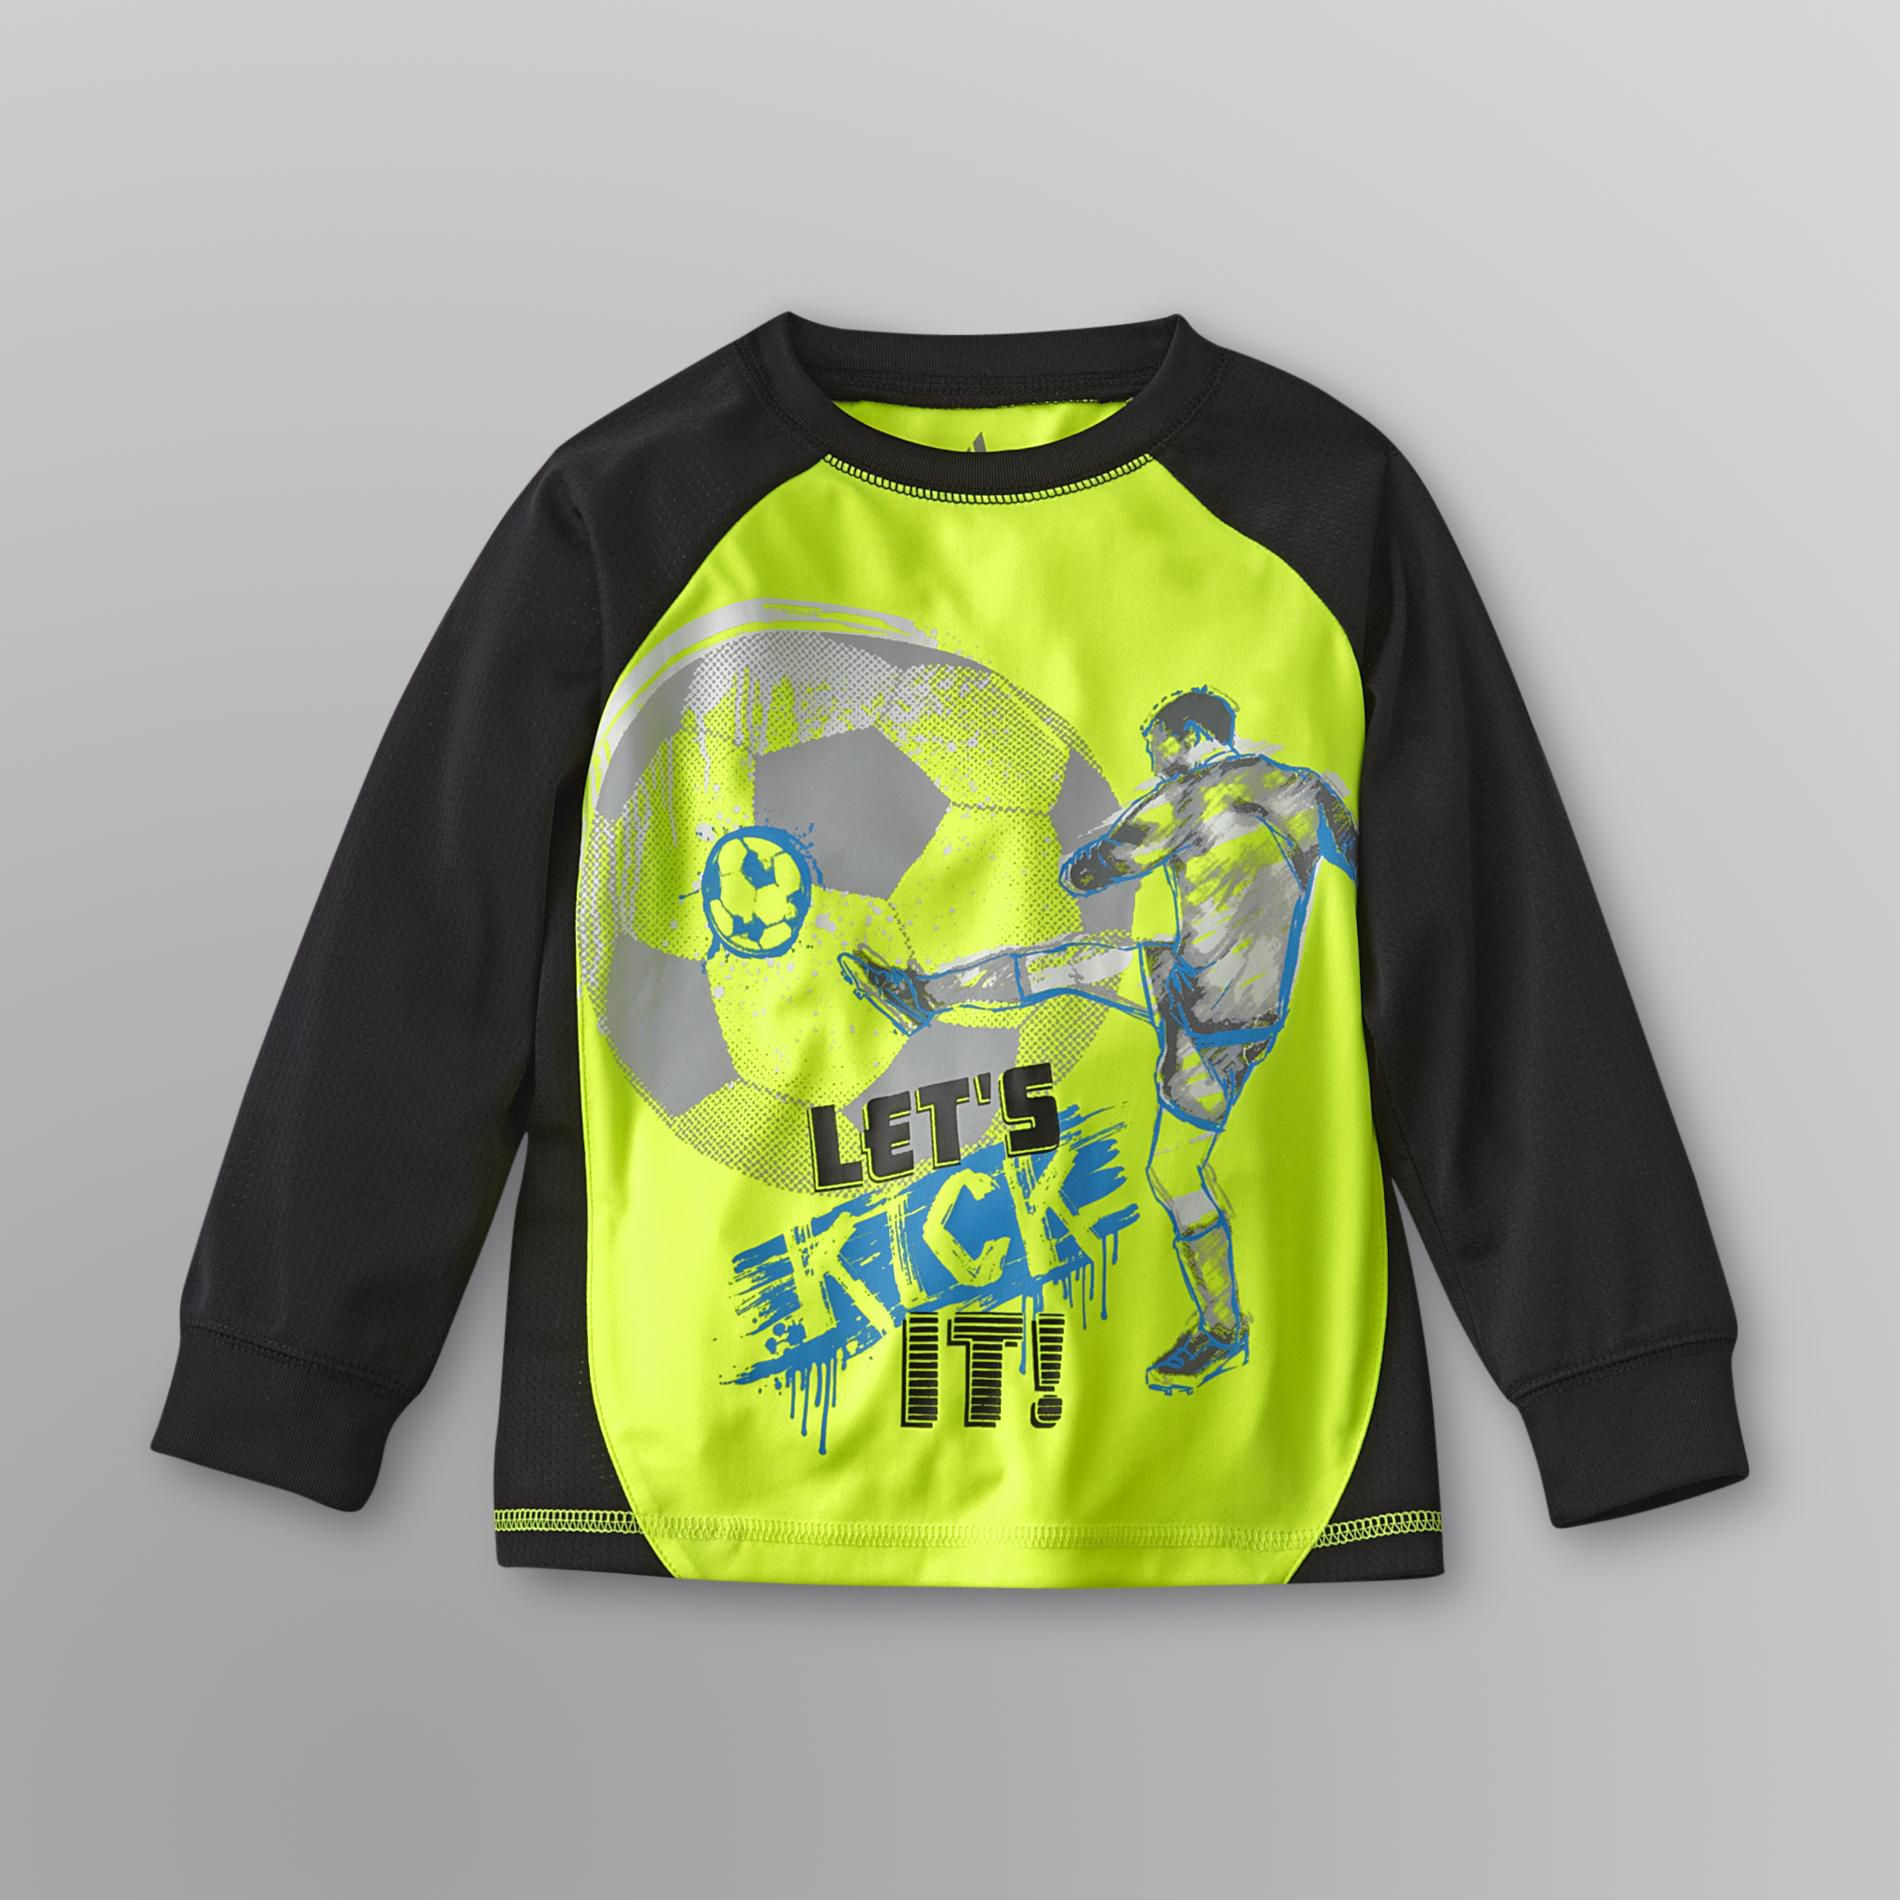 Athletech Toddler Boy's Mesh Graphic T-Shirt - Soccer